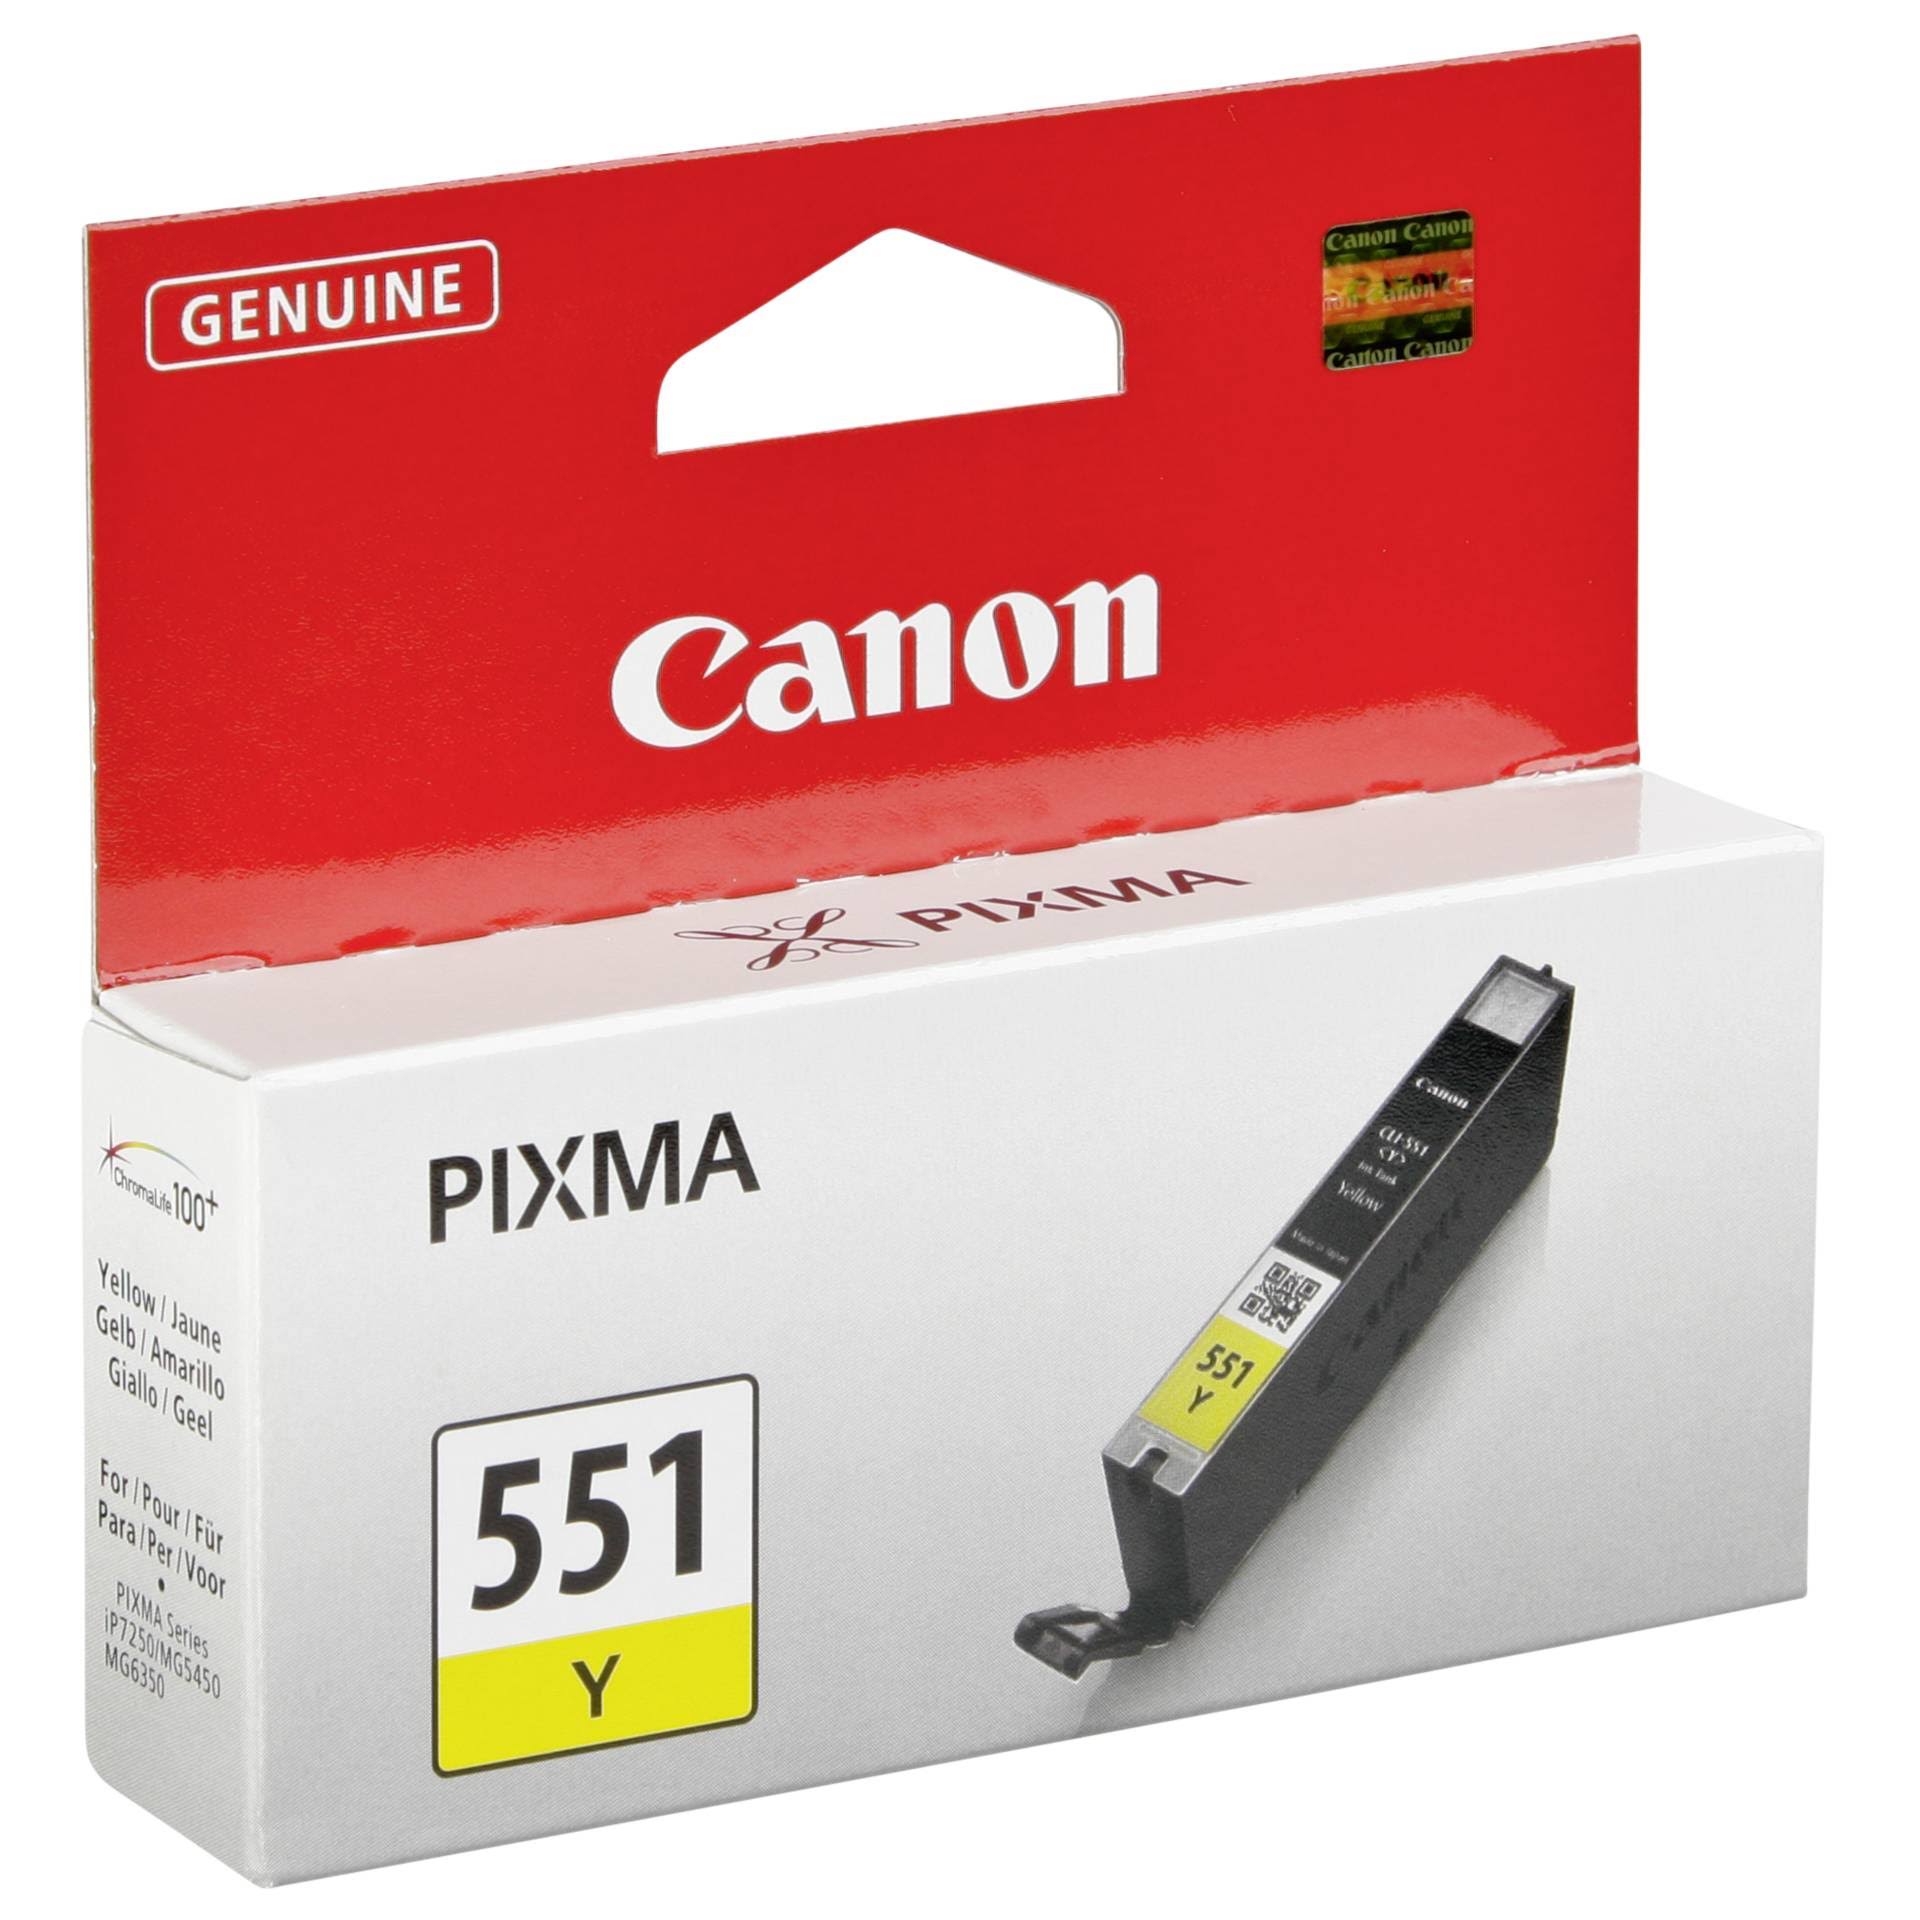 Canon Pixma 551 Ink Cartridge - Yellow